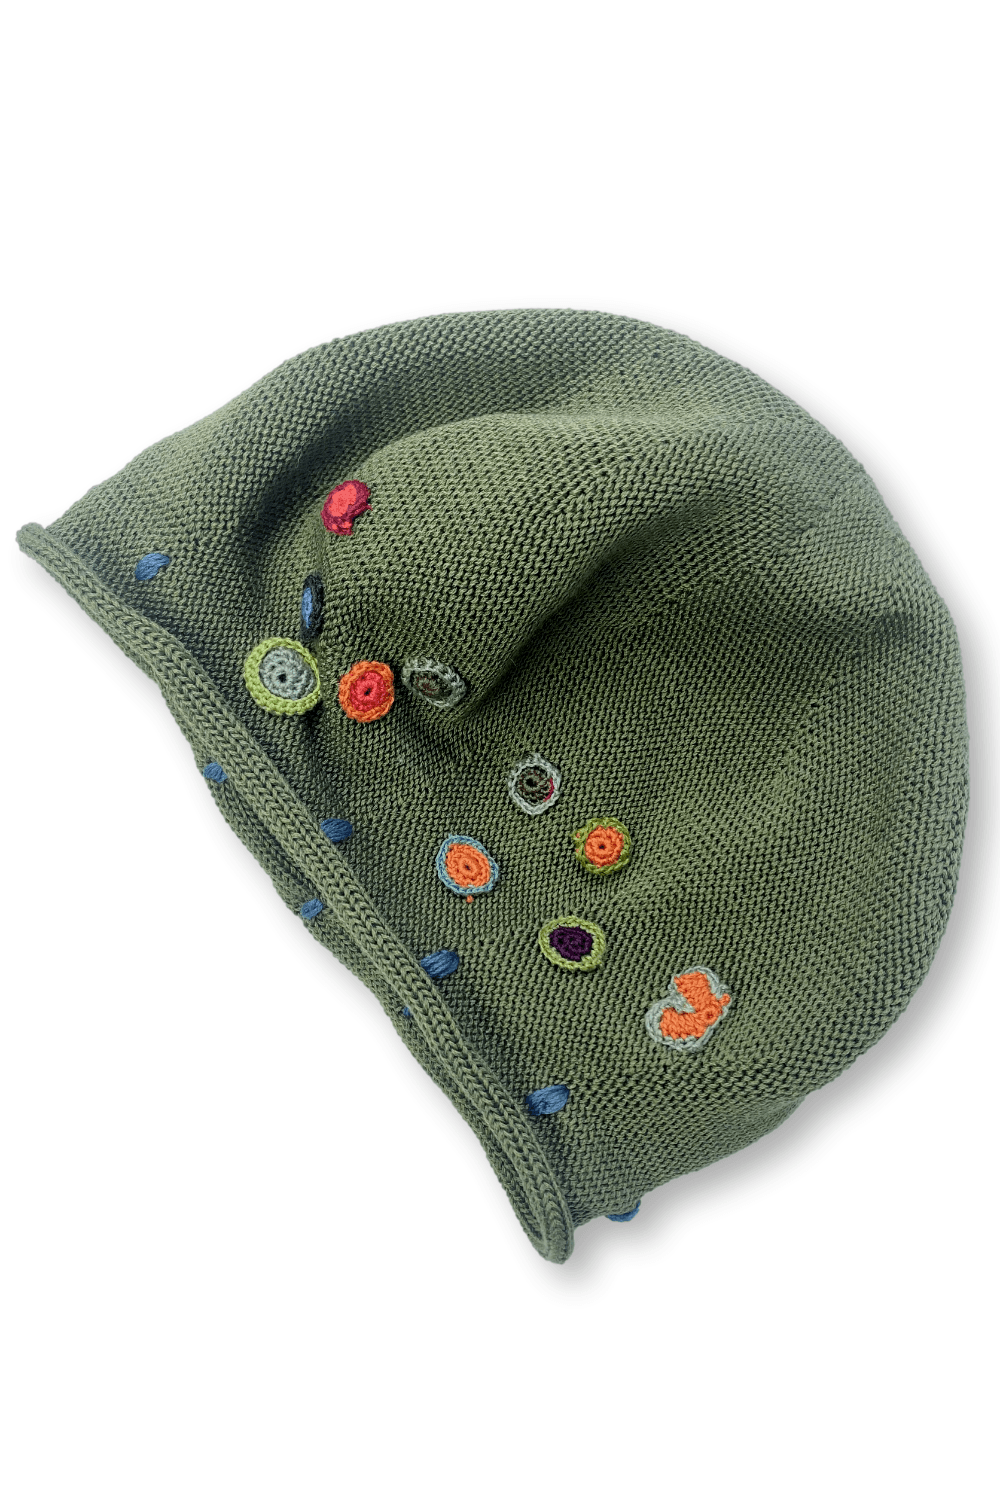 Woman's pima cotton sage color knit tam with tiny decorative flowers.